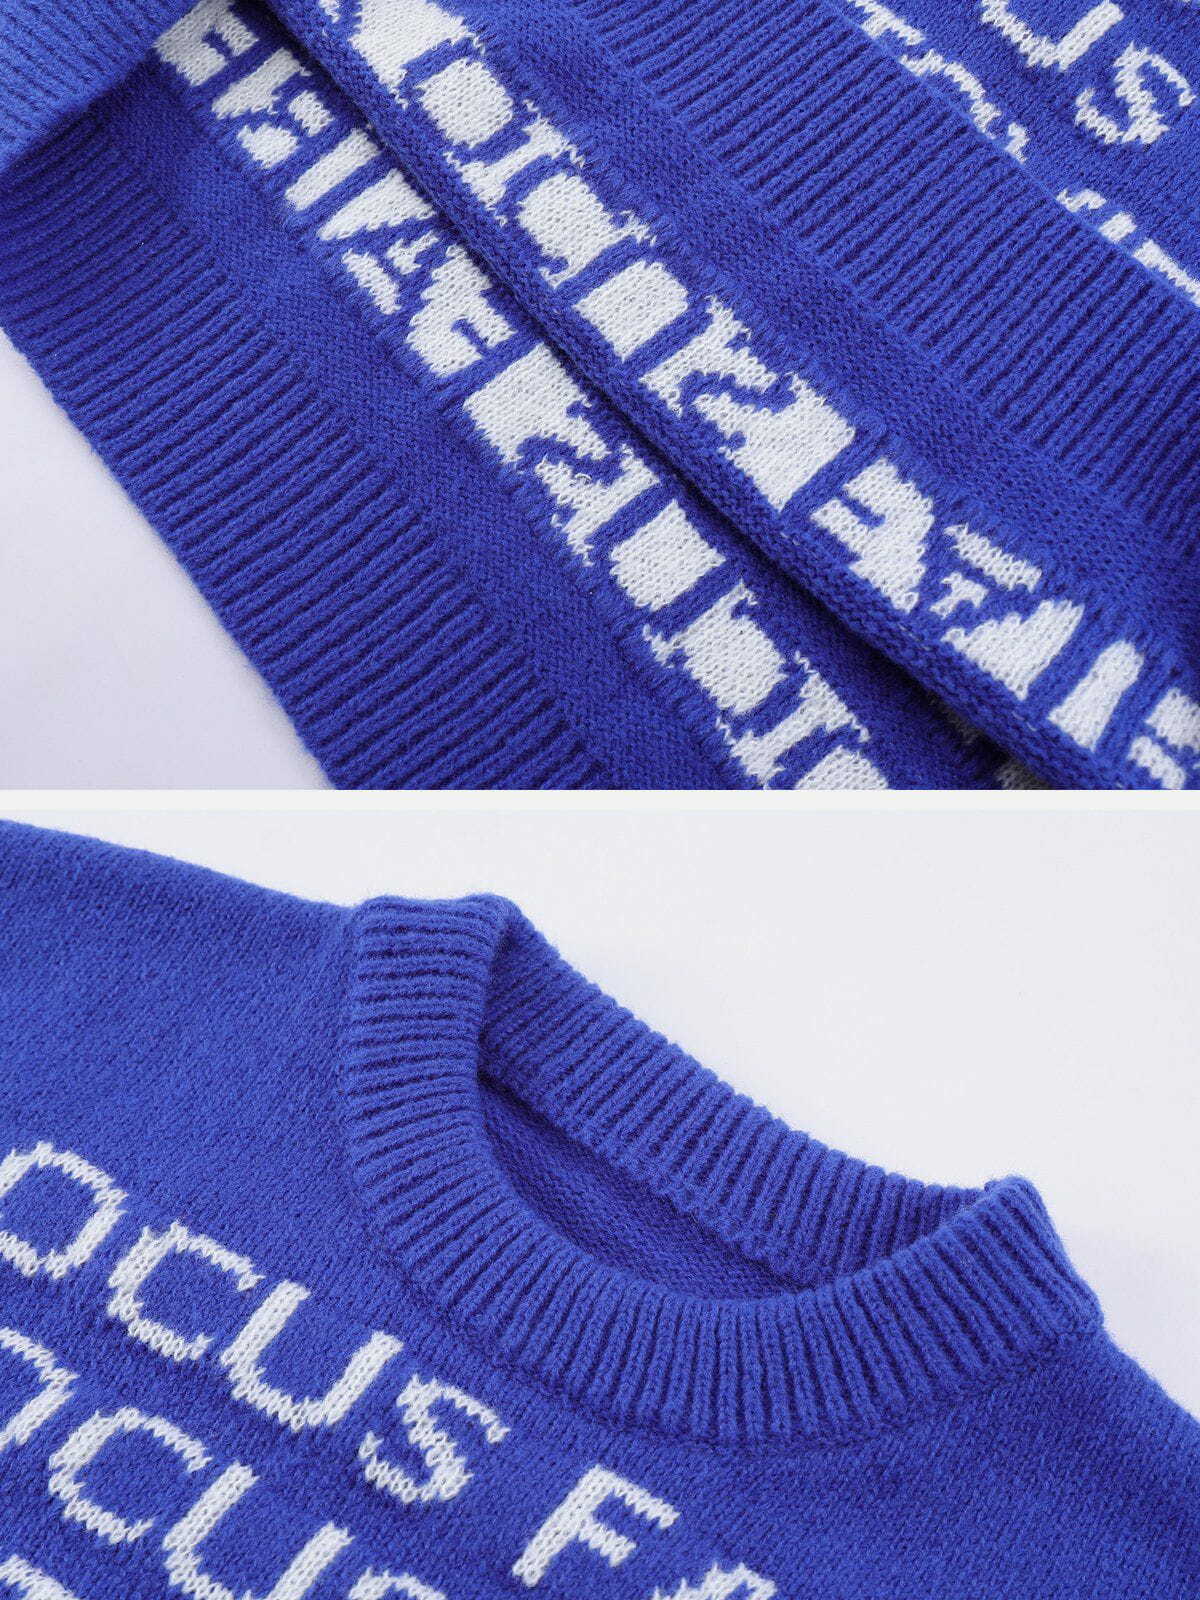 retro alphabet sweater edgy & vibrant streetwear 5798